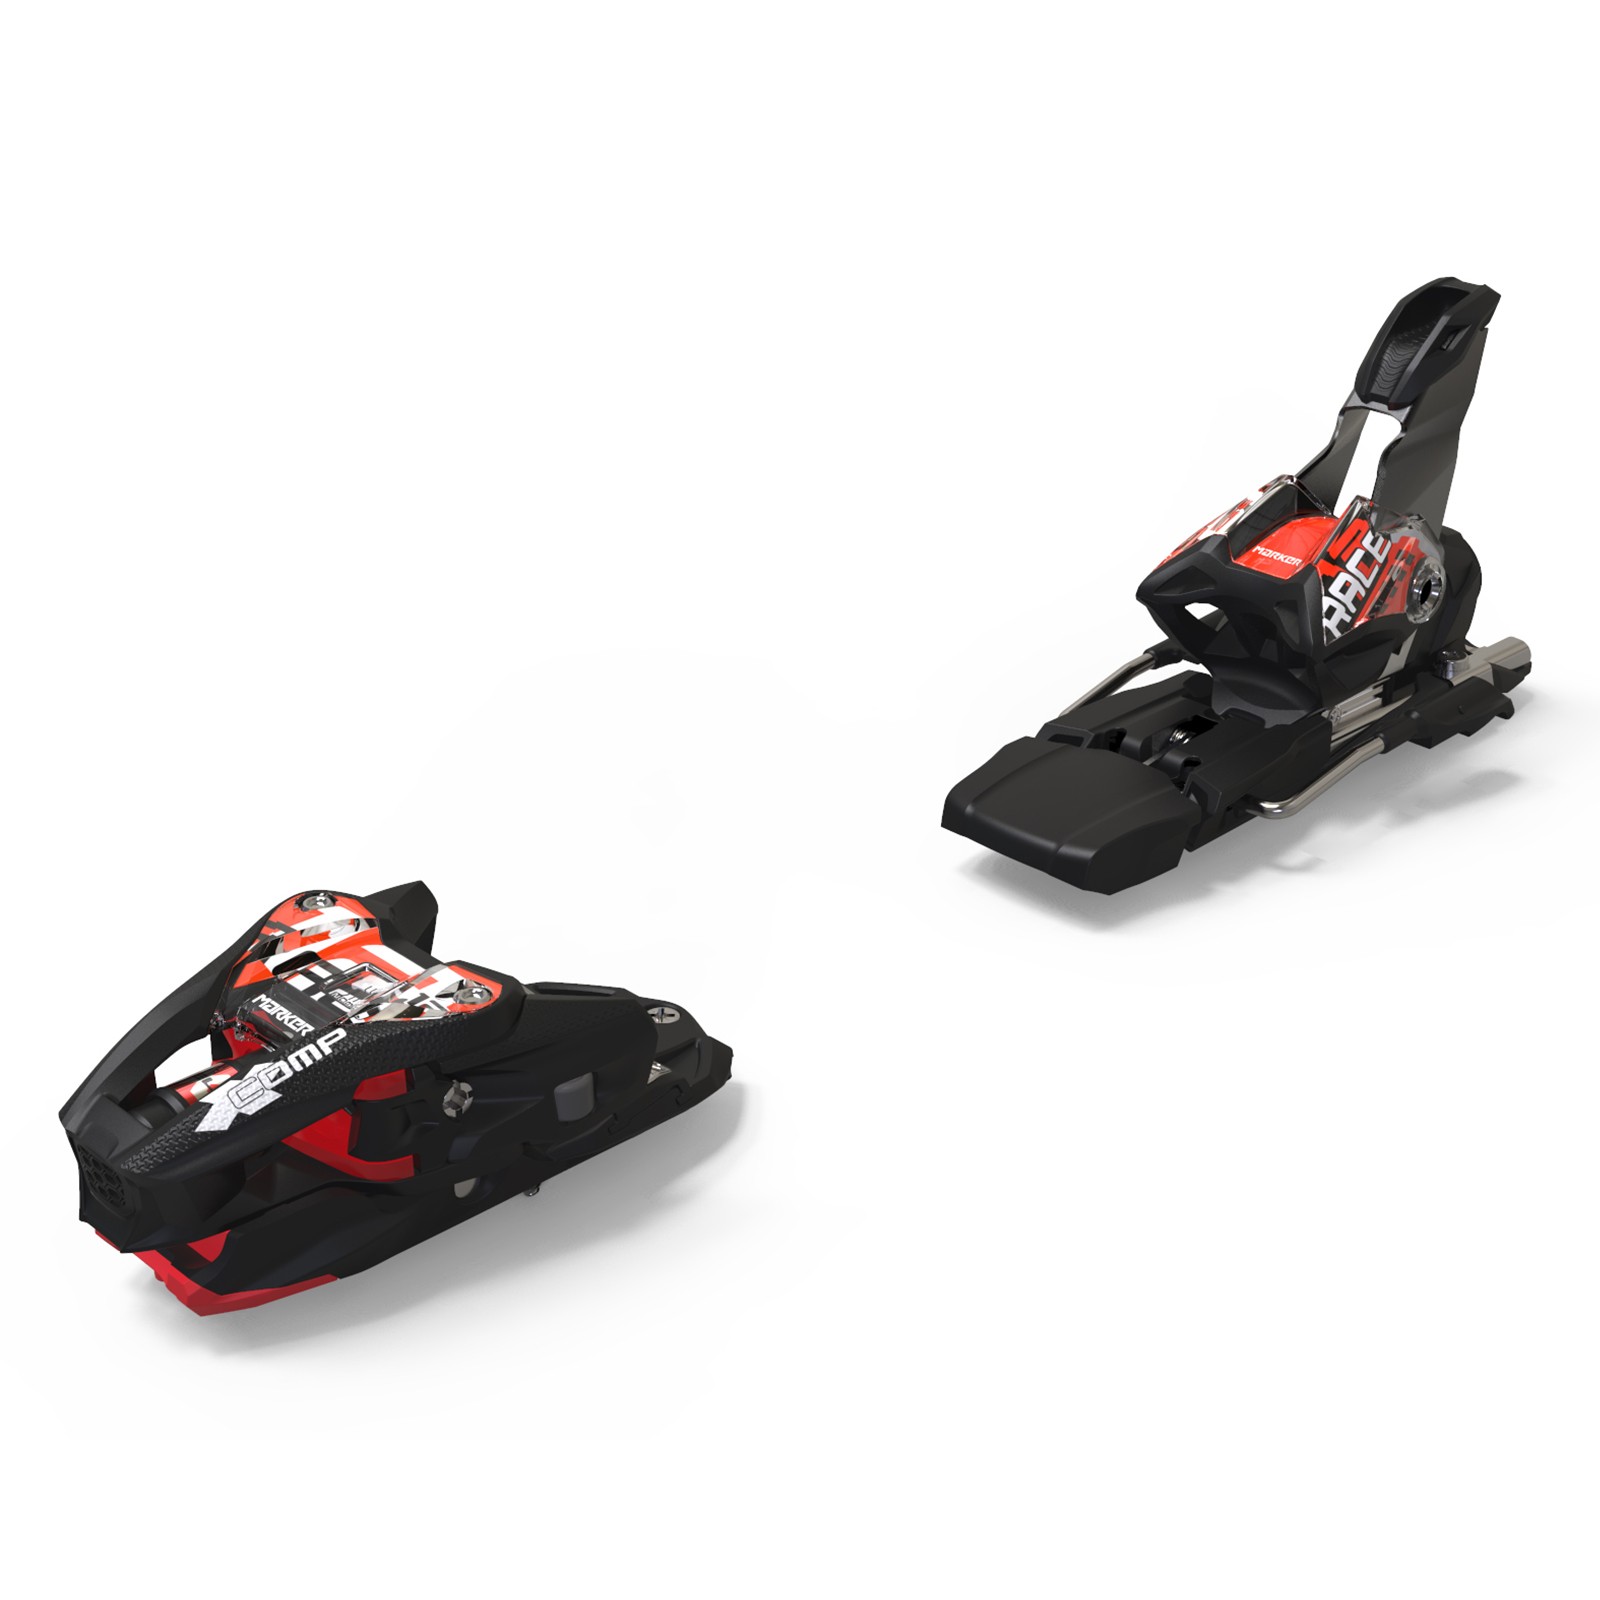 MARKER Xcomp 12 black flo red Racing Skibindung